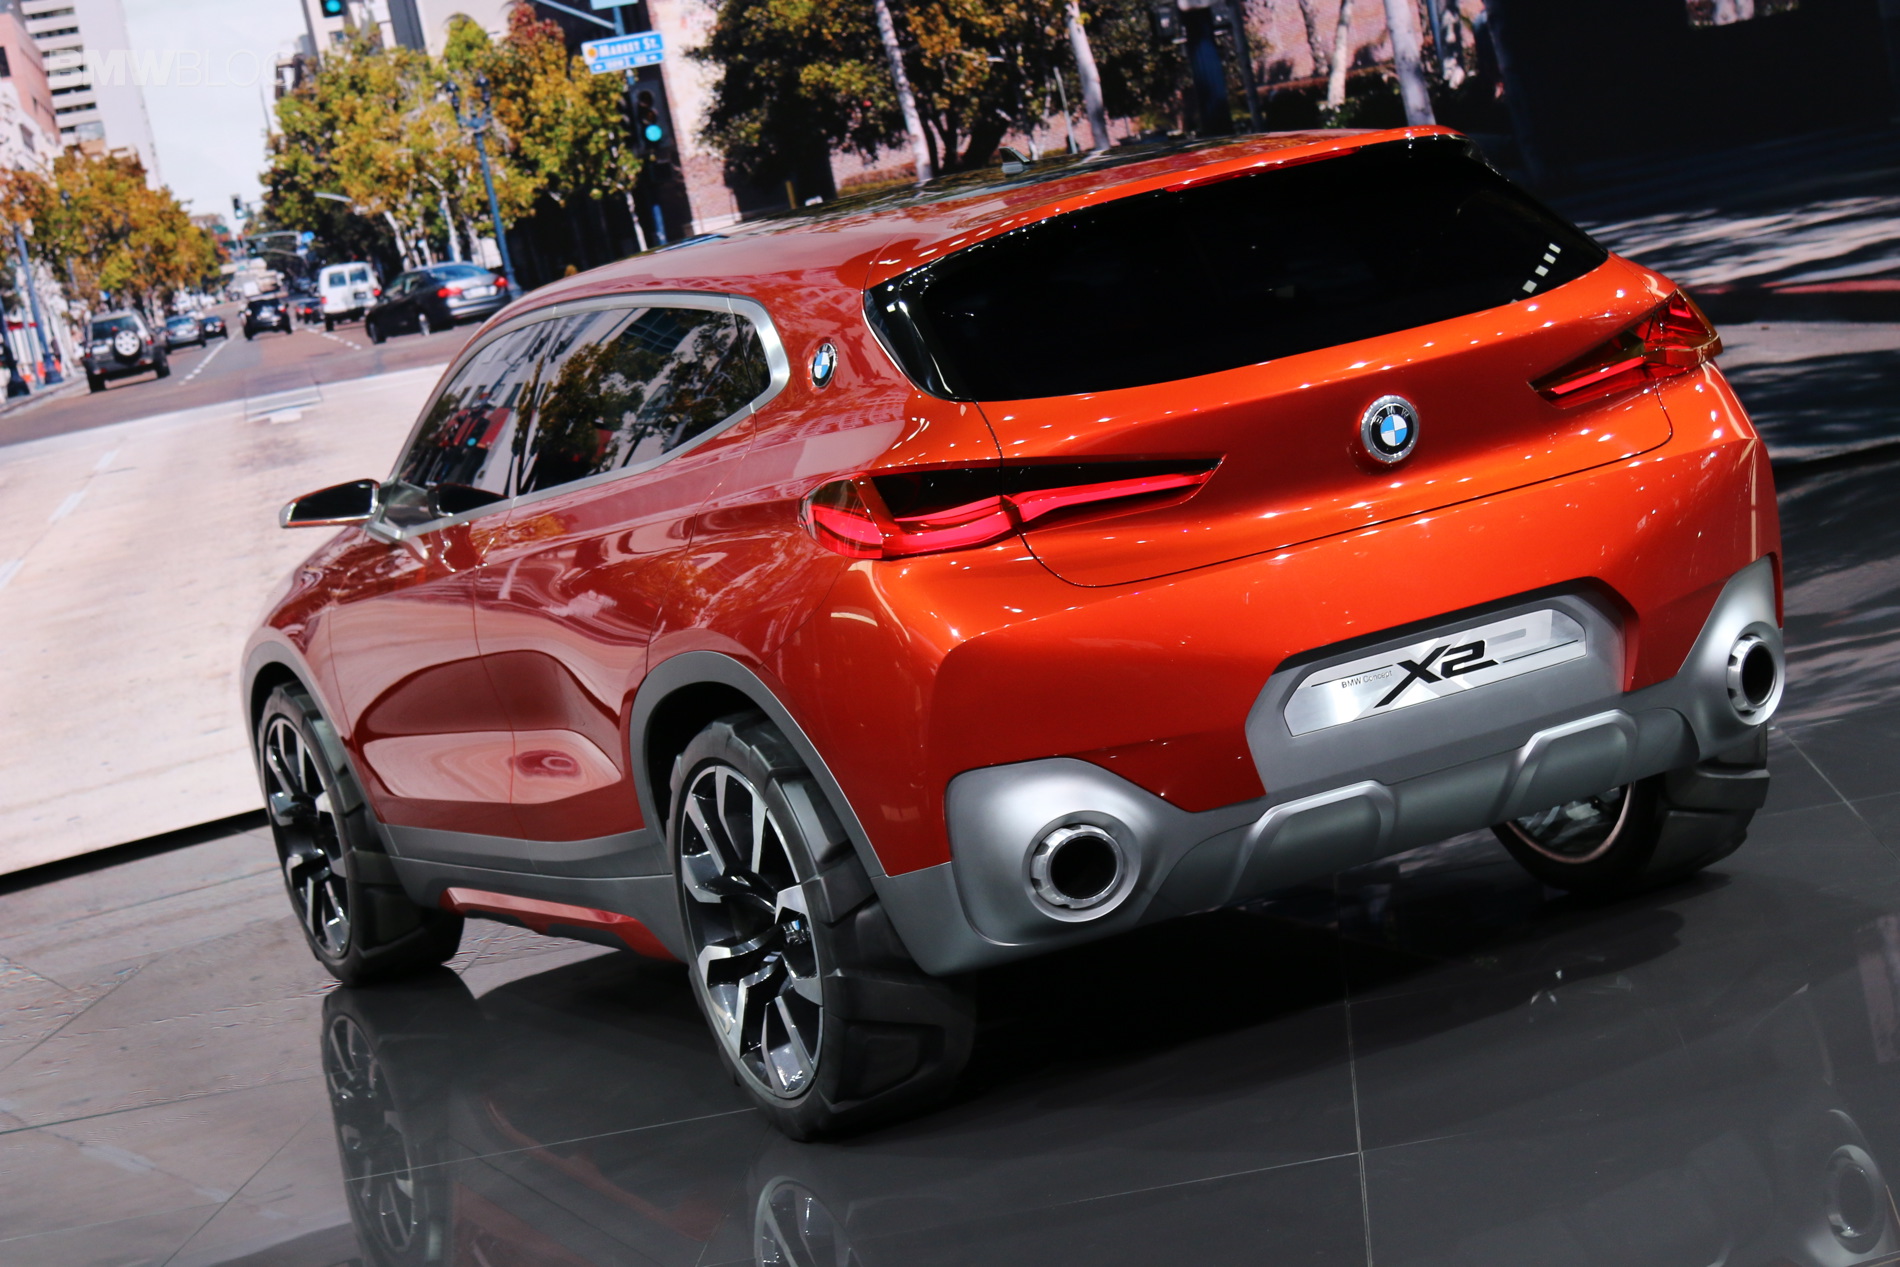 New BMW Concept X2 photos live from 2016 Paris Auto Show